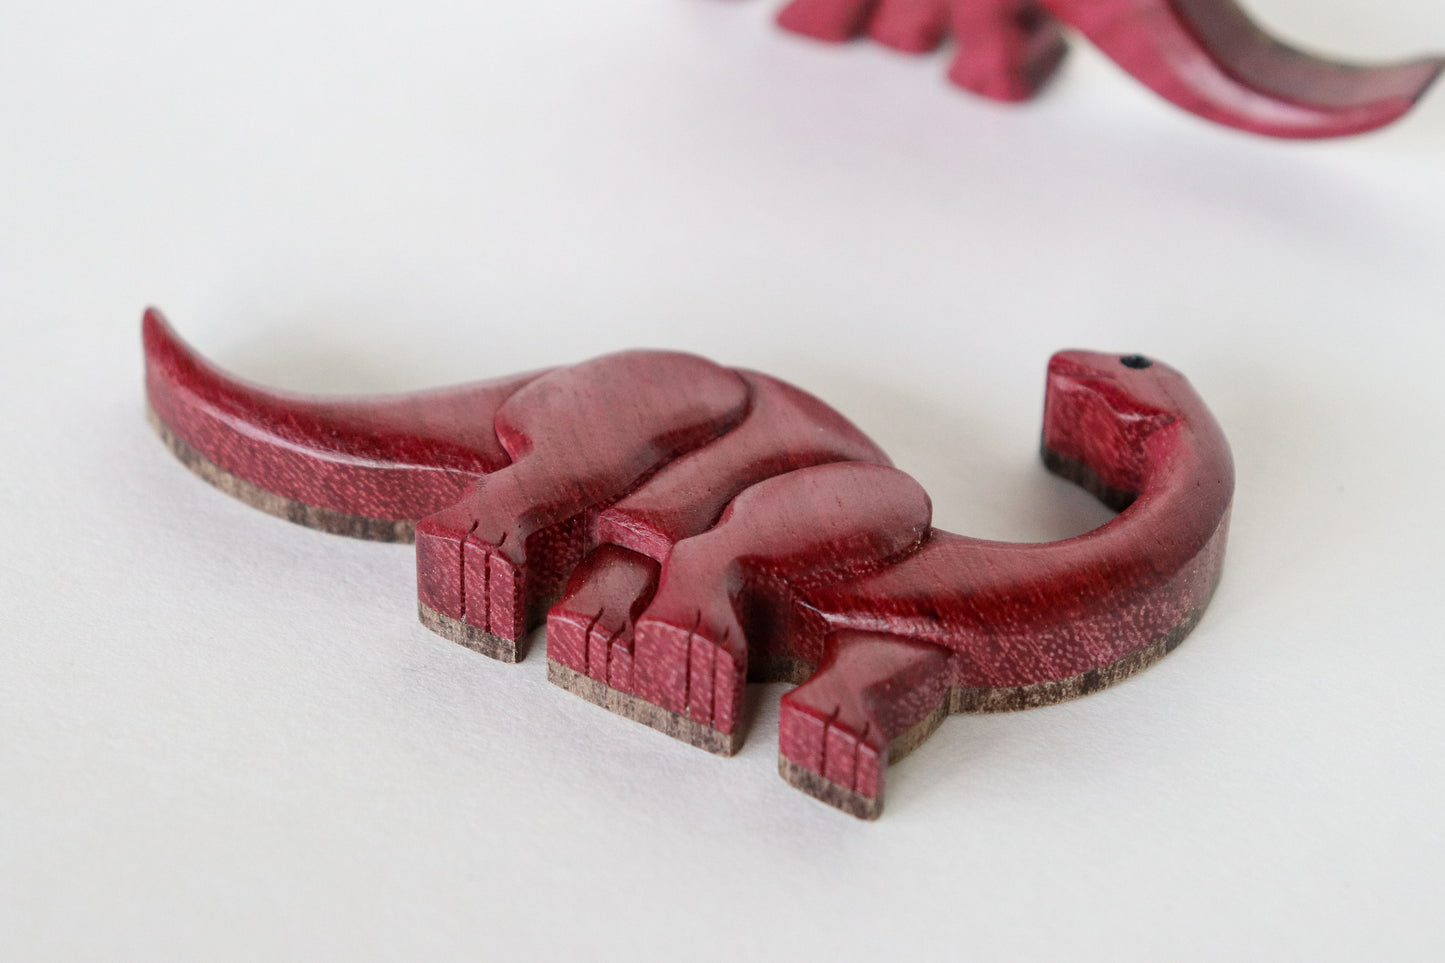 Brontosaurus Dinosaur Magnet / Ornament